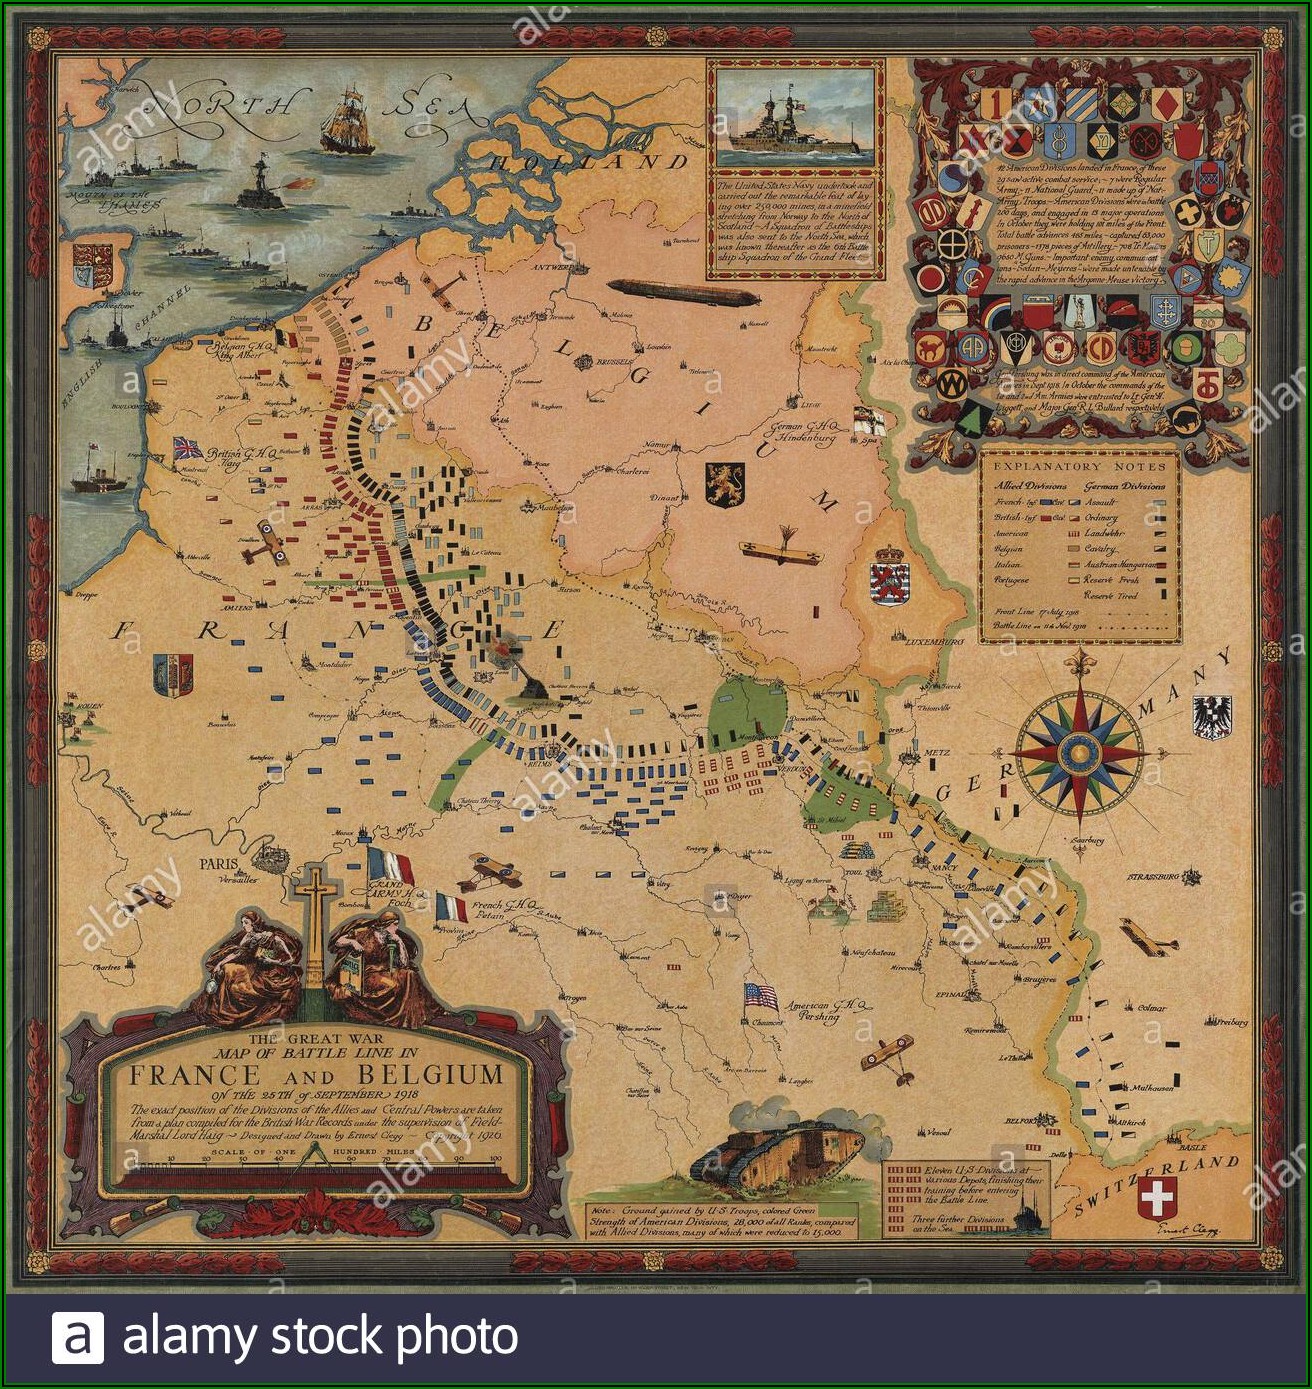 Historical Battle Maps For Sale